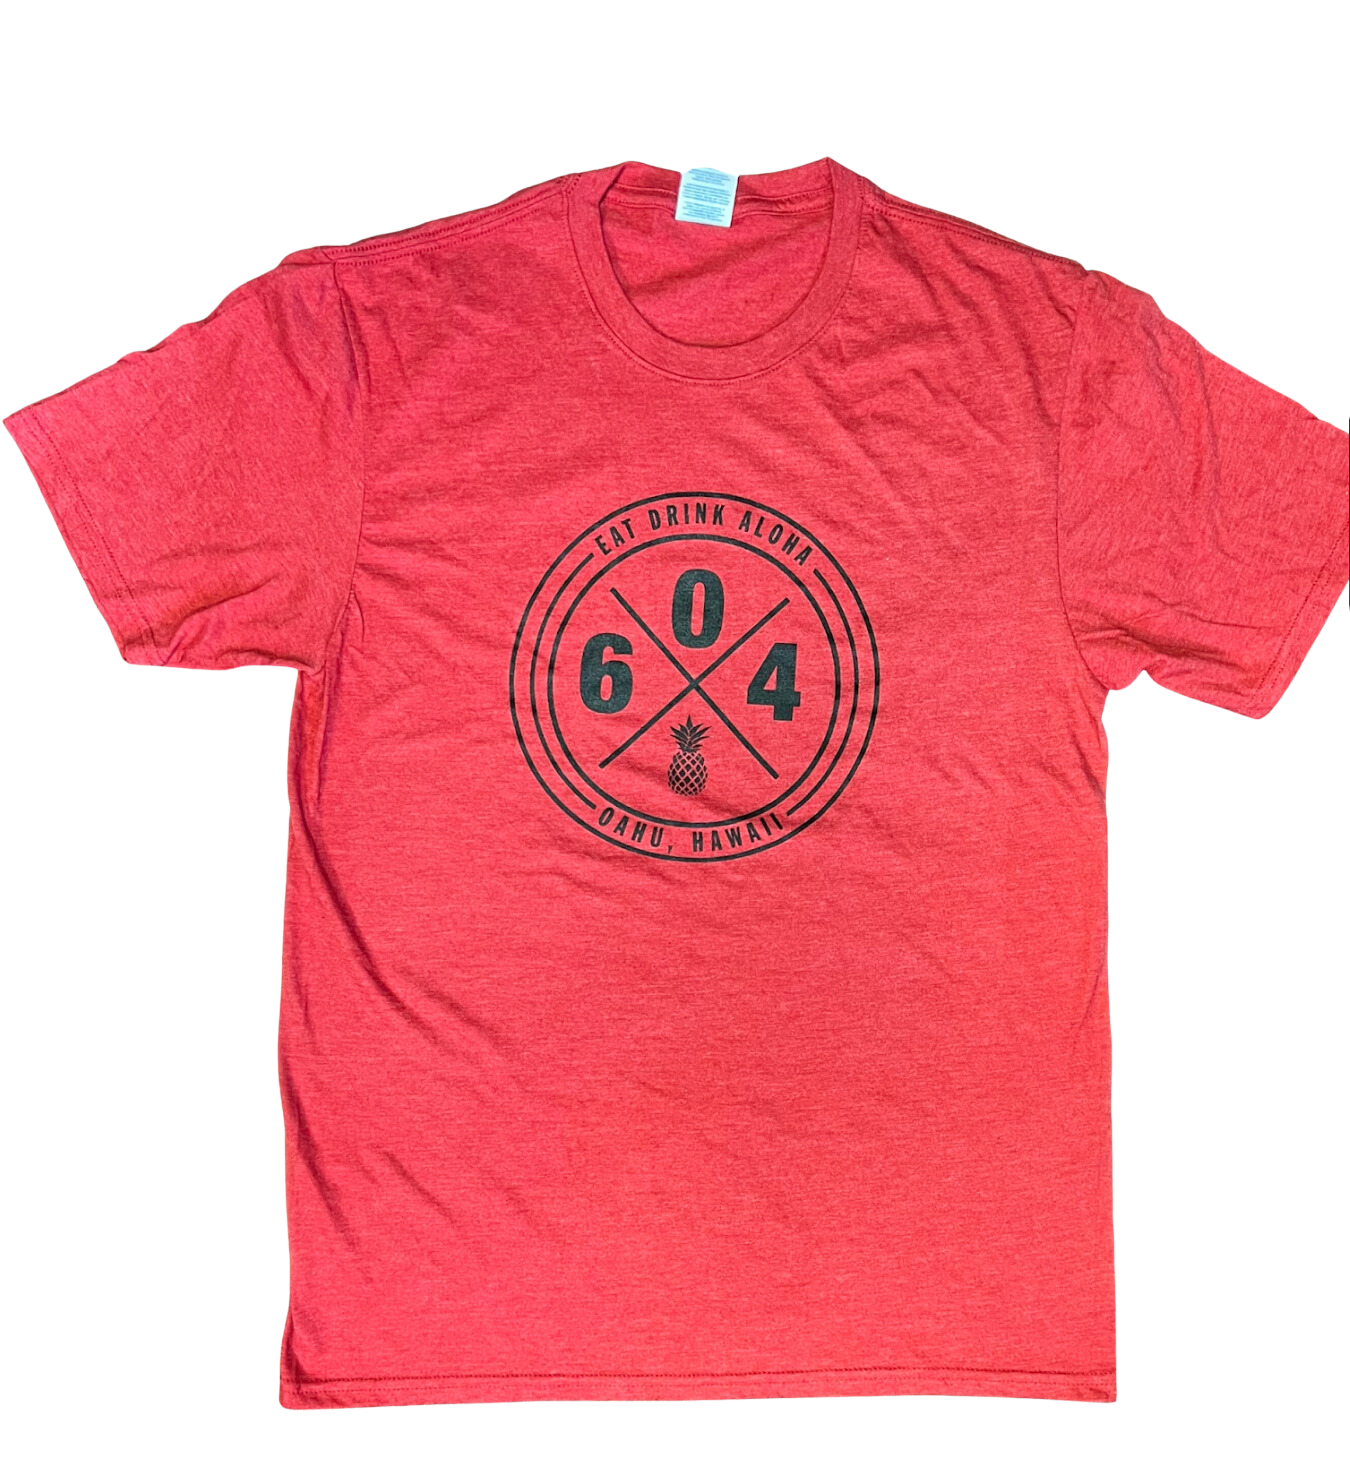 Red Men's T-Shirt 604 X